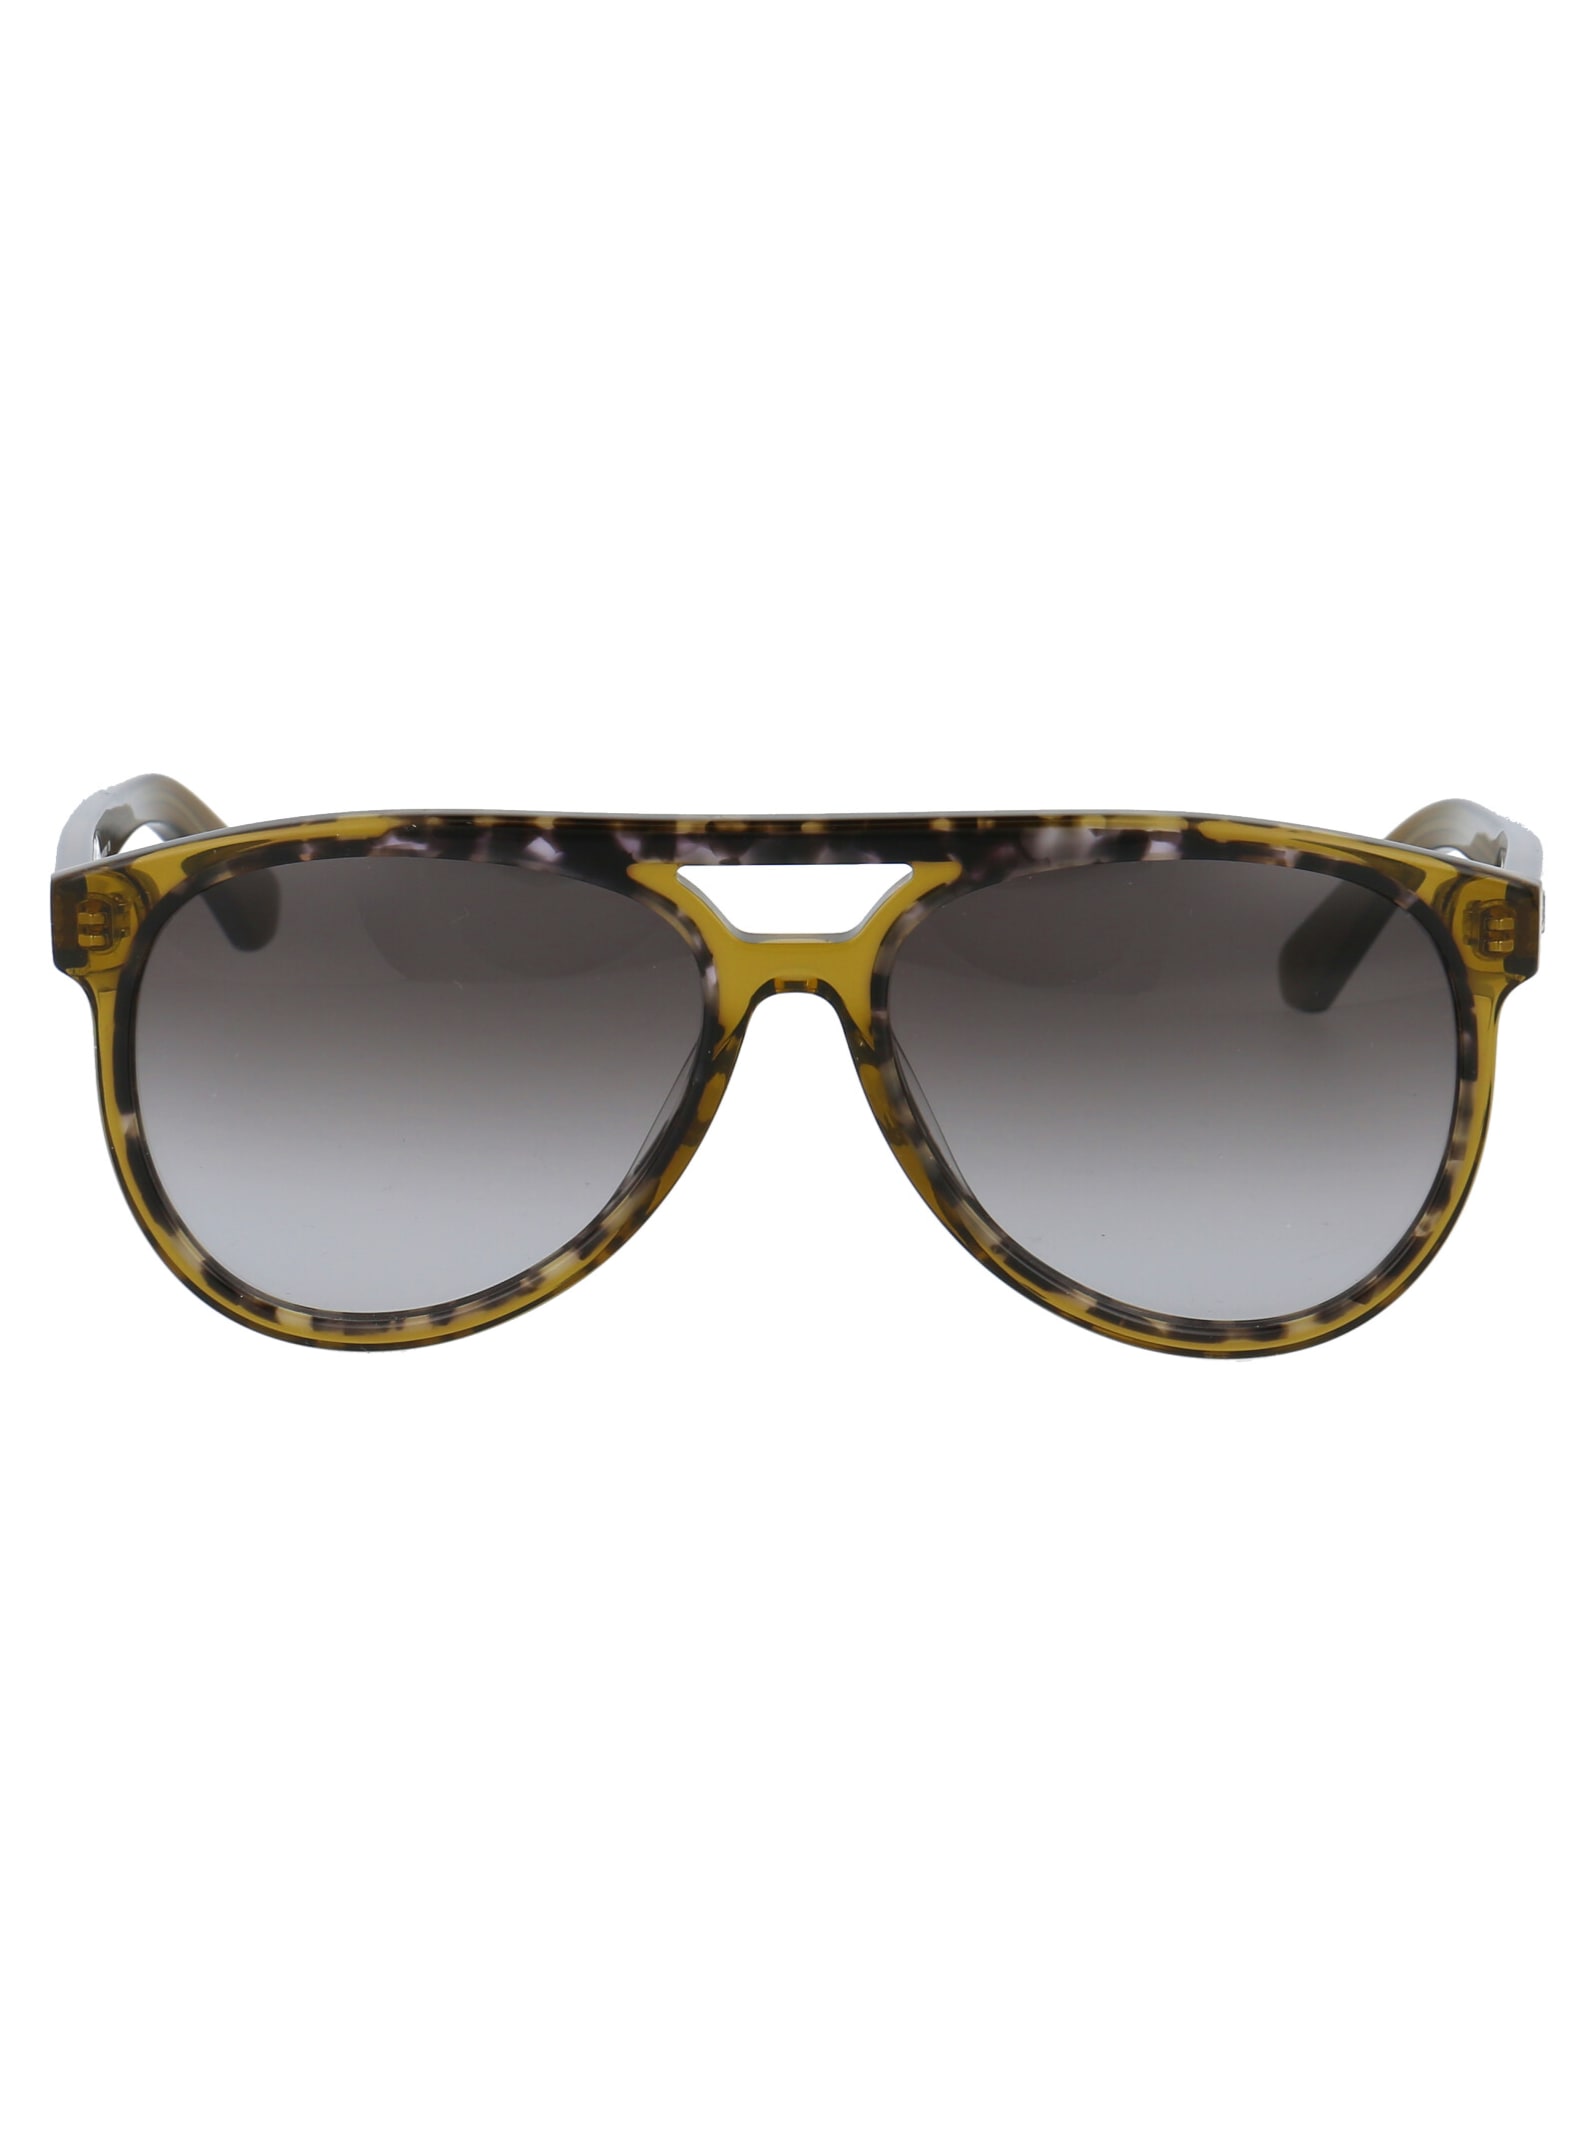 Ferragamo Sf945s Sunglasses In 055 Grey Havana/ Brown